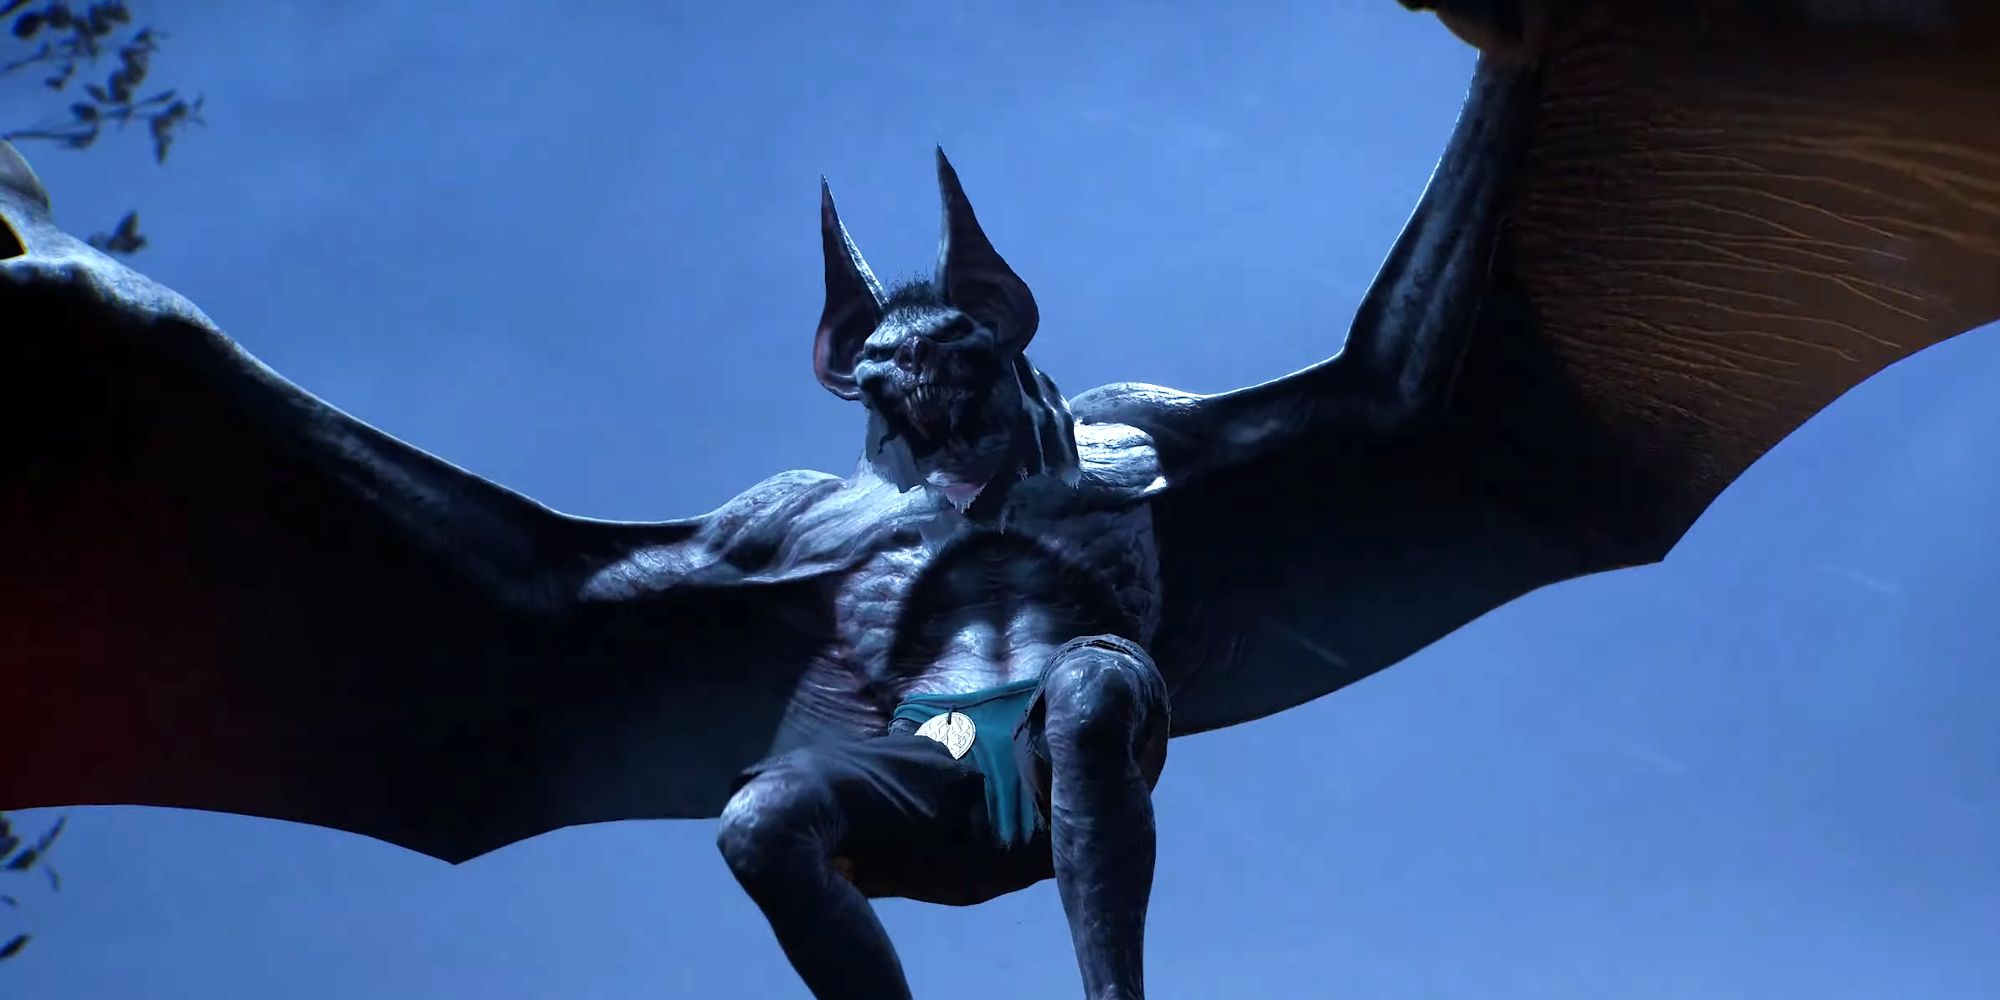 A League Of Shadows Man-Bat flying in the sky in Gotham Knights (2022)